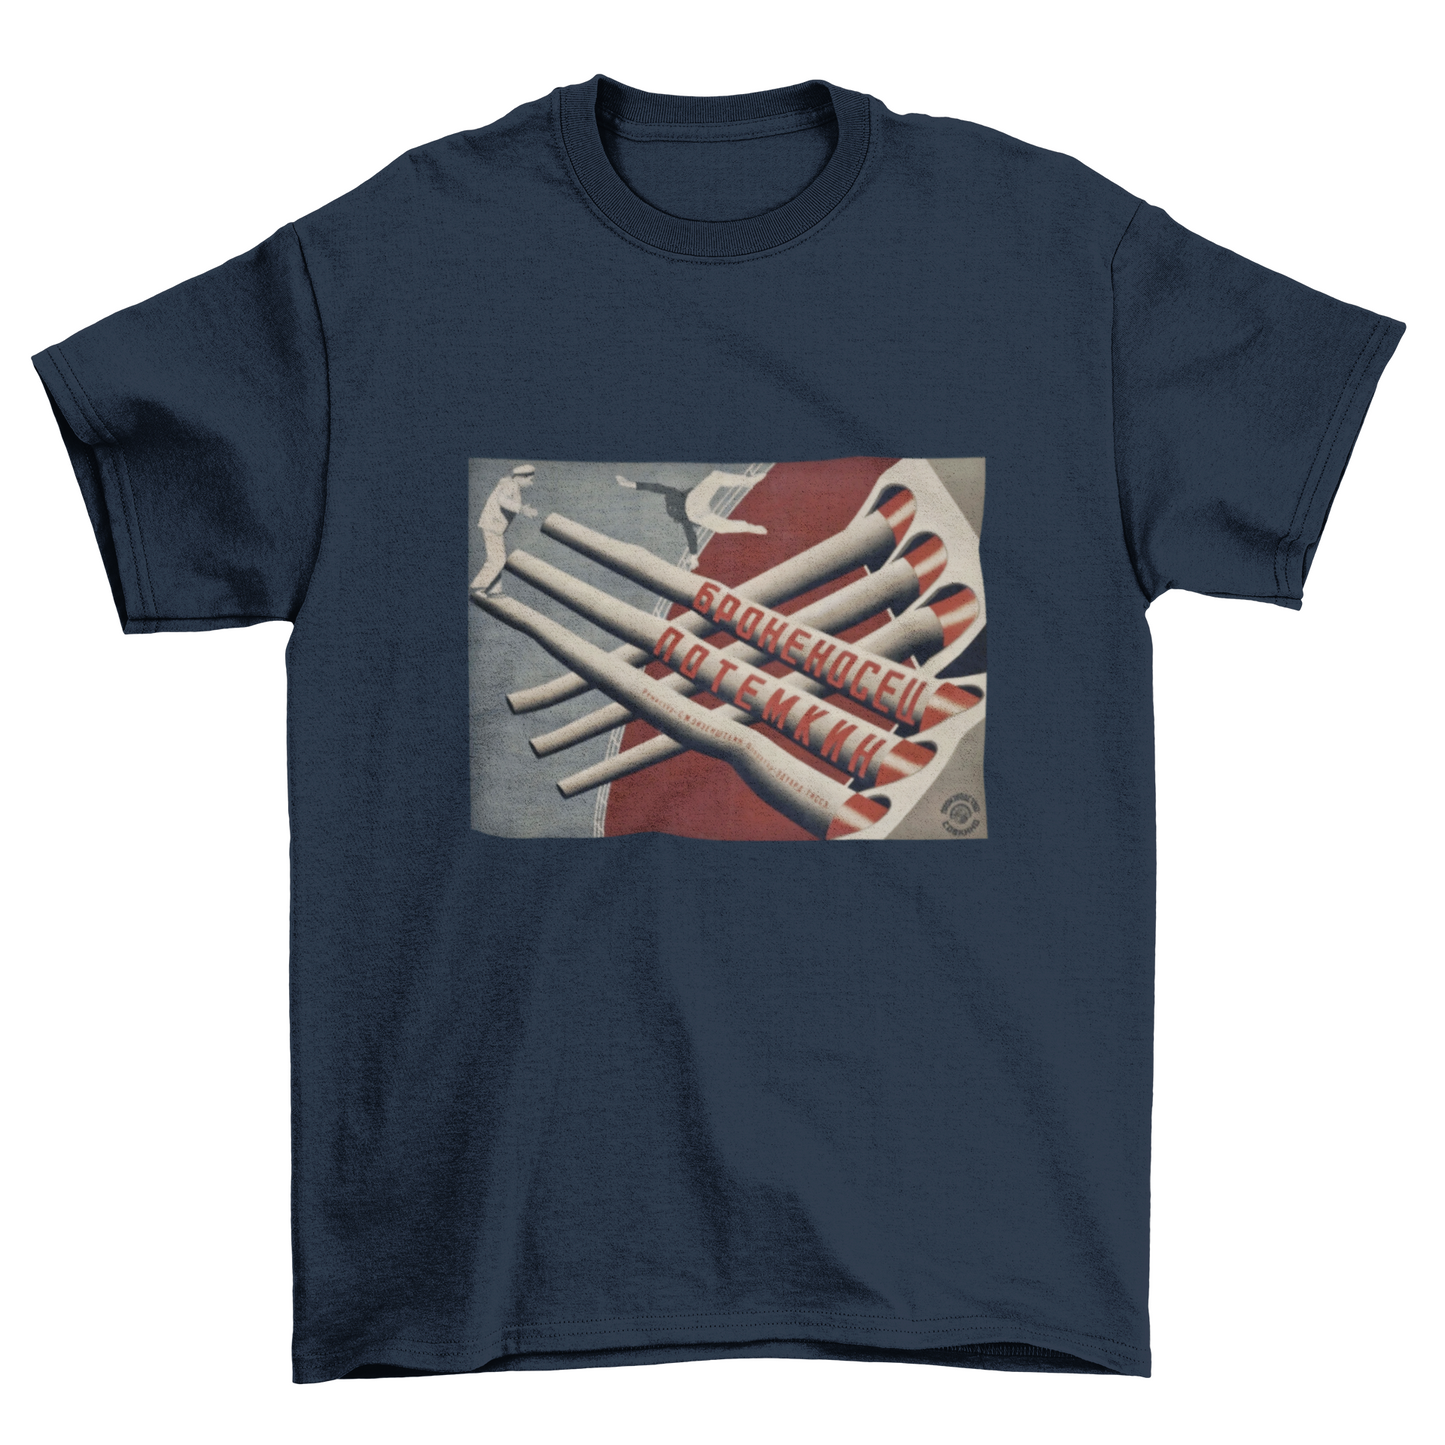 Battleship Potemkin Poster Shirt